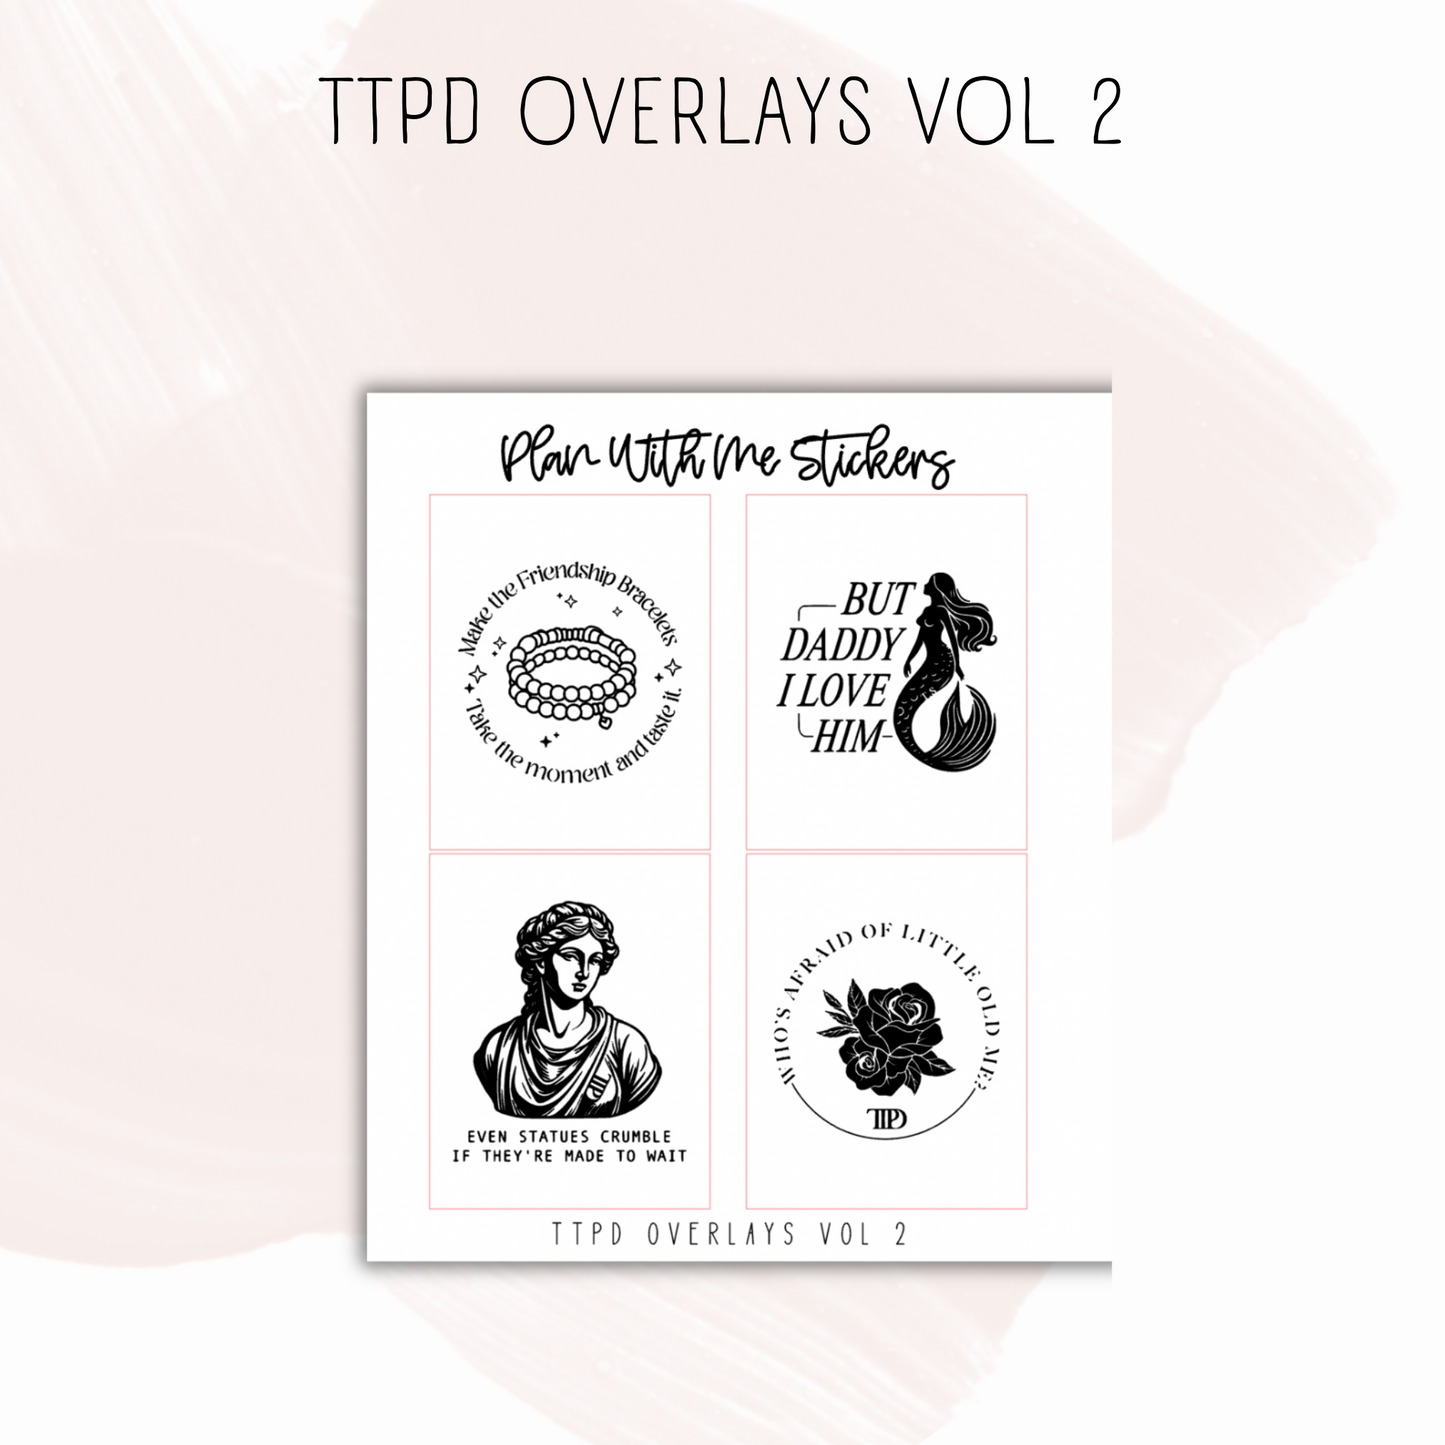 TTPD Overlays Vol 2